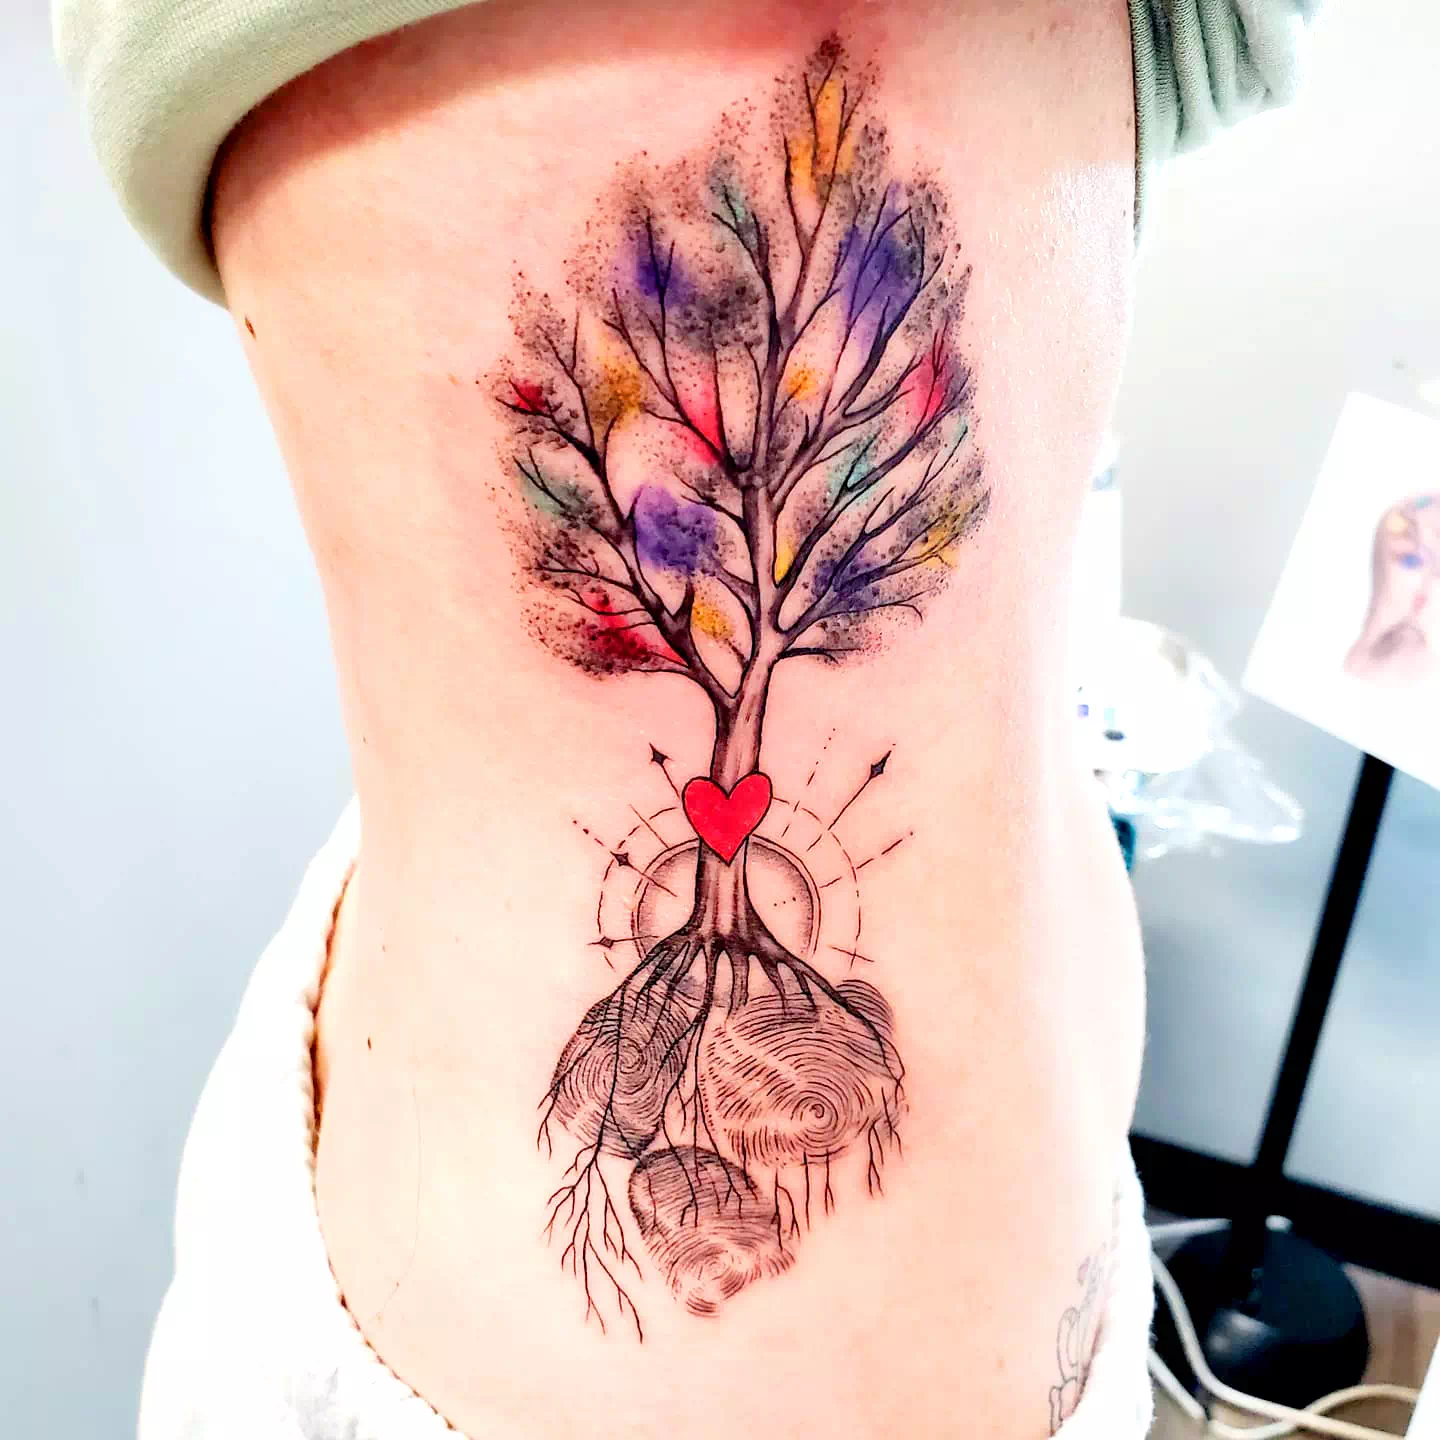 Tatuaje del árbol genealógico 2